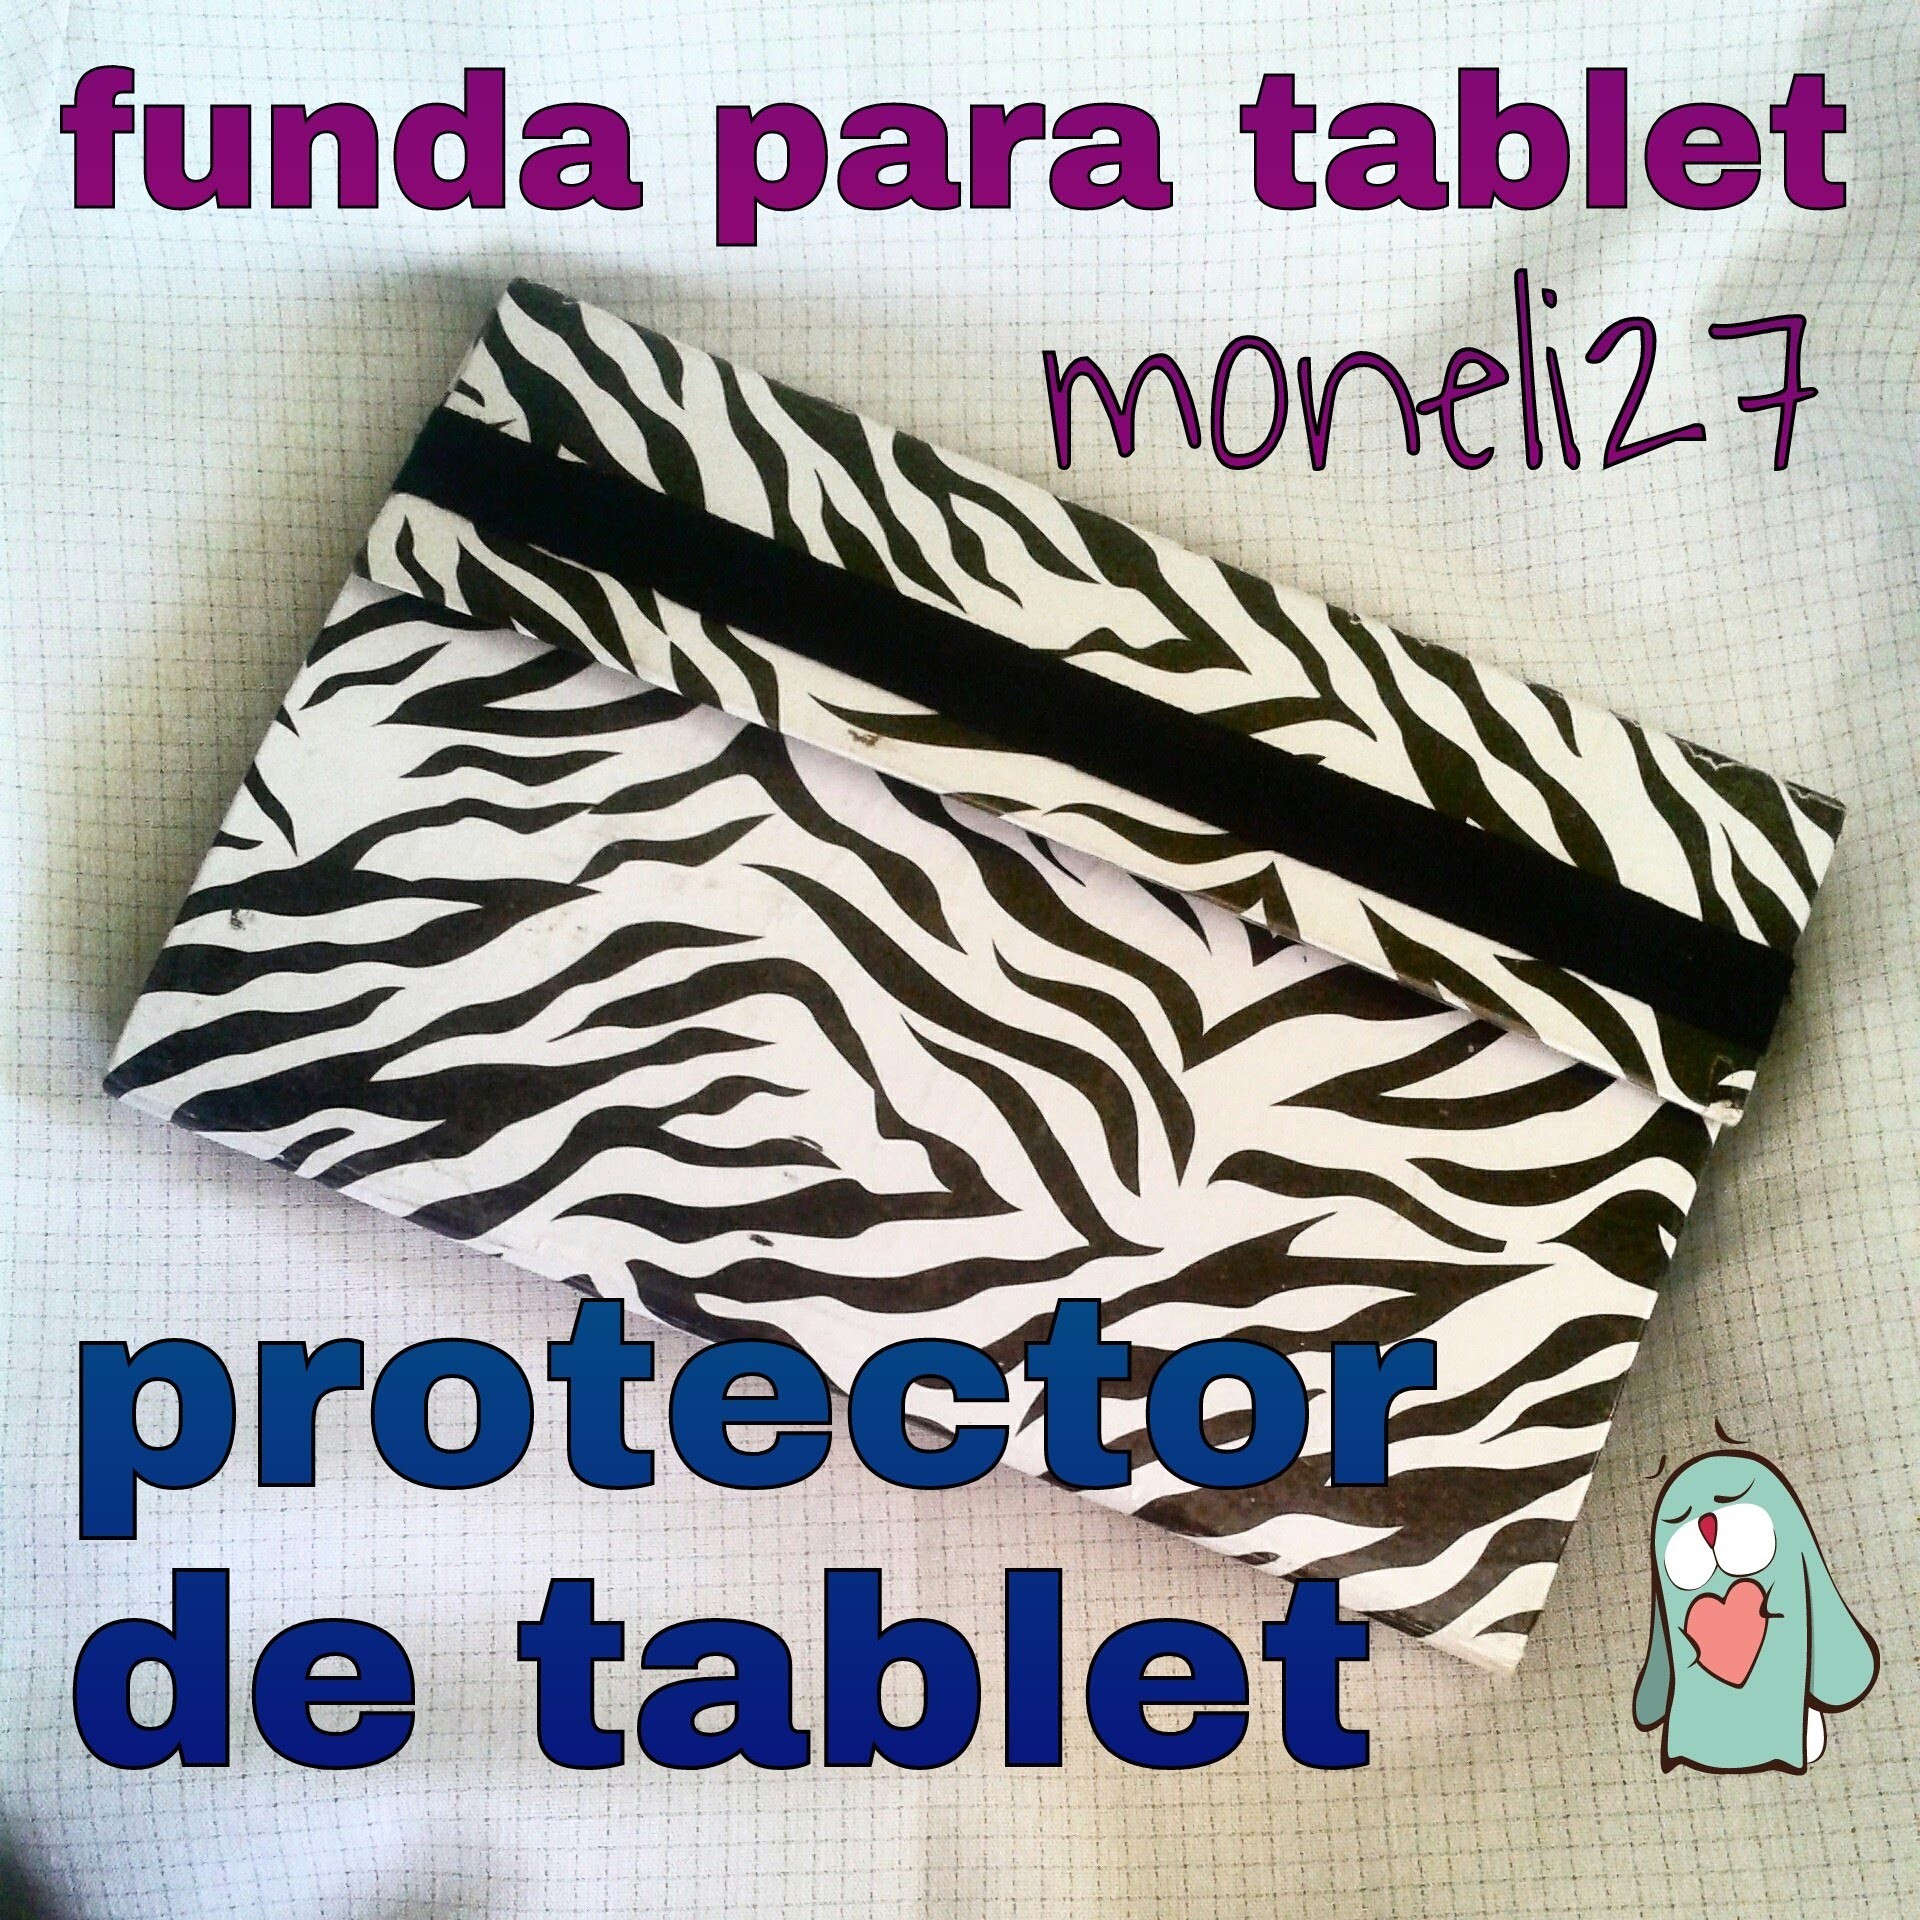 "PROTECTOR FUNDA PARA TABLETA".  "CASE FOR TABLET